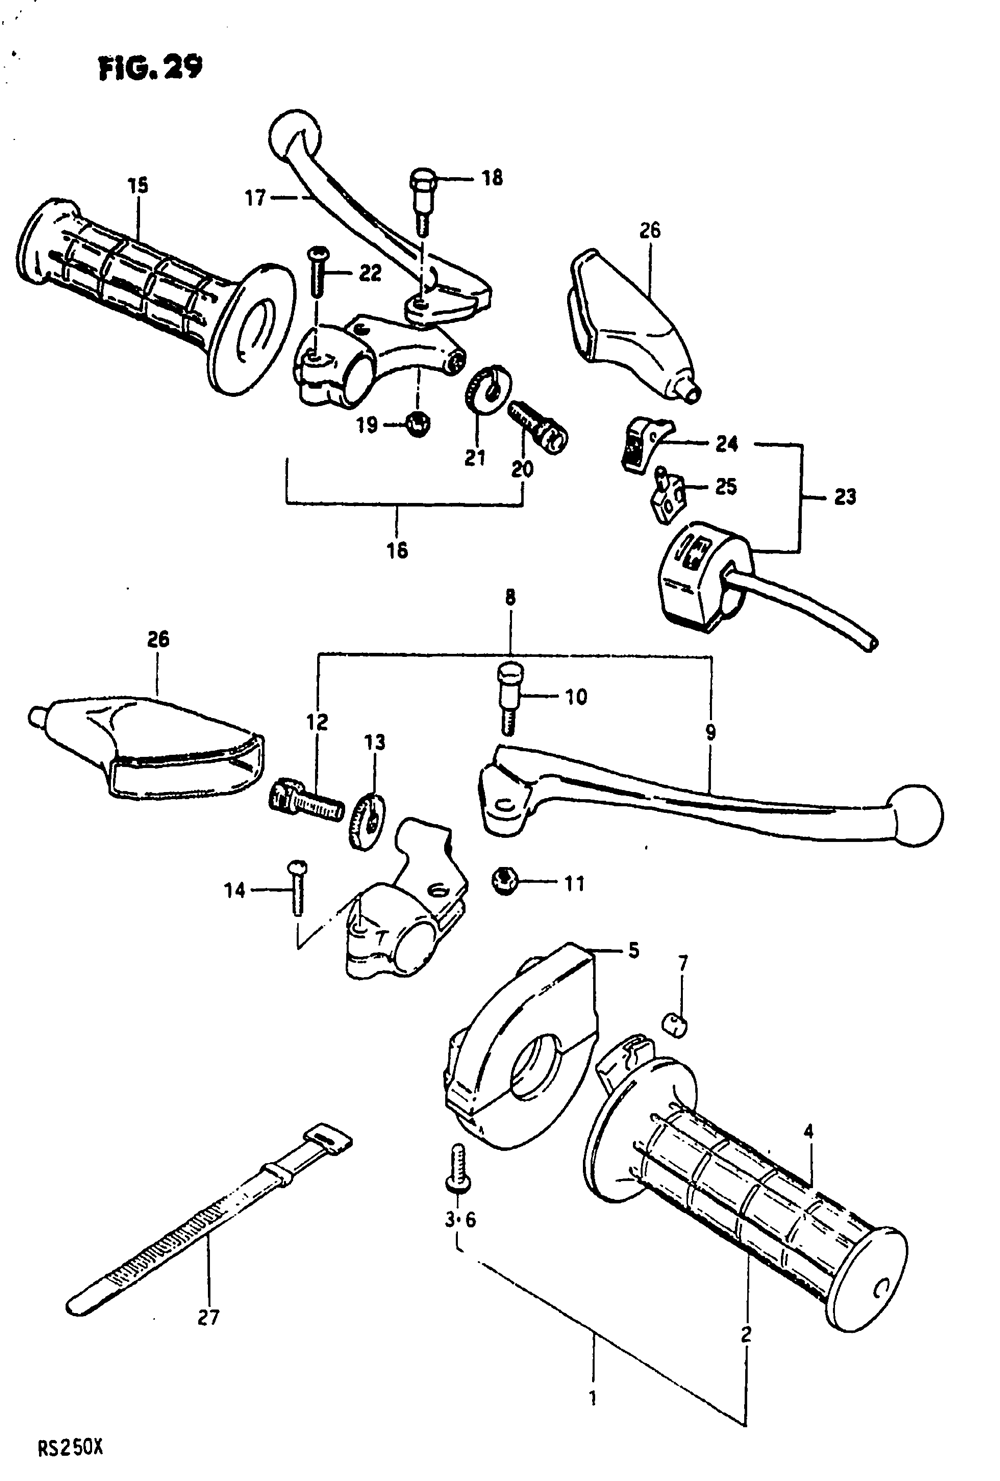 Handle grip - lever